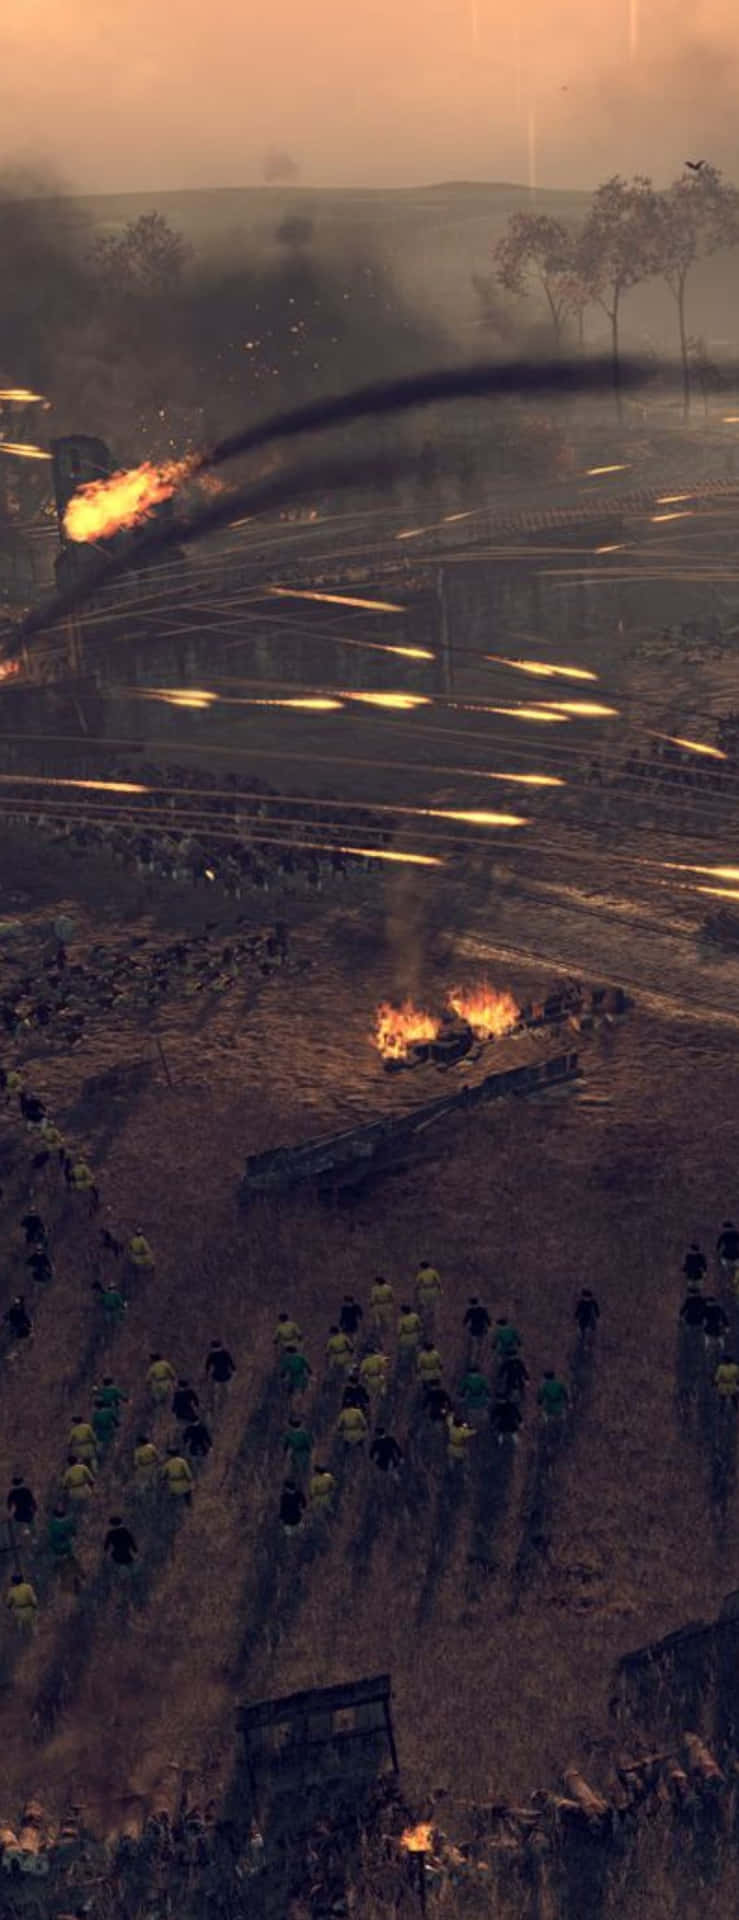 Pixel3xl Bakgrundsbild Med Total War Attila-armé